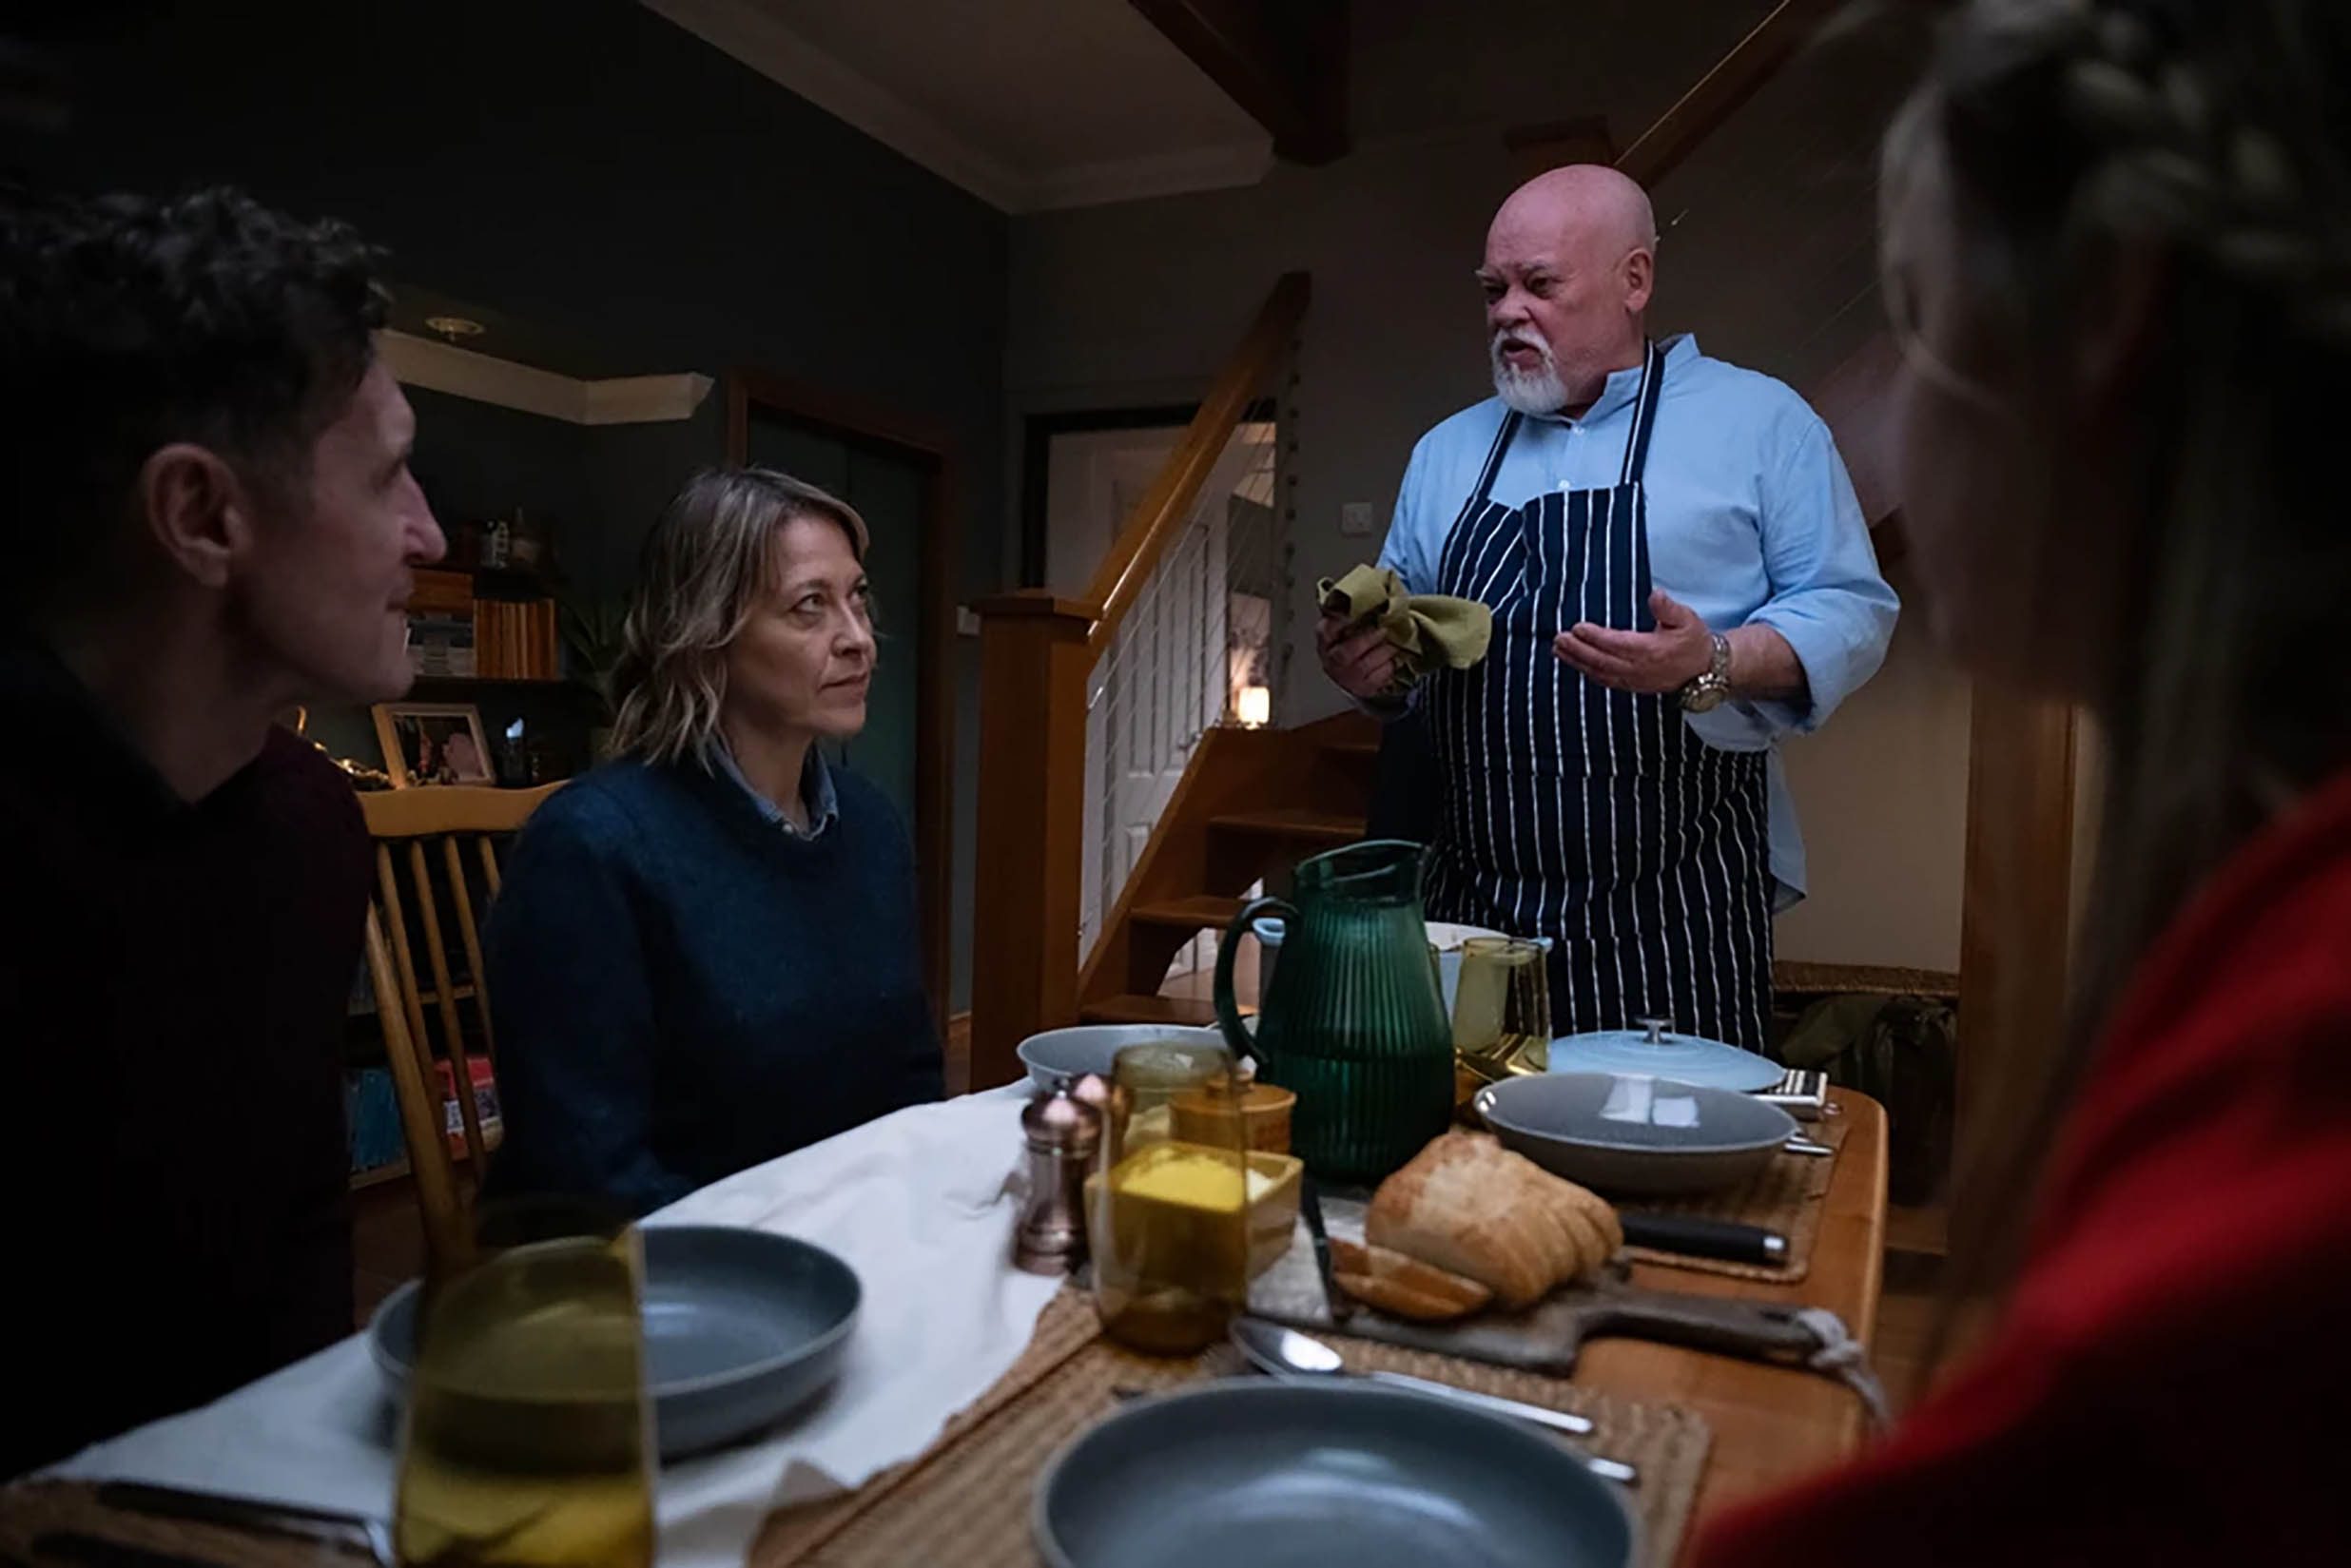 Paul McGann as Jake, Nicola Walker as Annika, Sven Henriksen as Magnus, and Silvie Furneaux as Morgan around the dinner table in 'Annika' Season 2